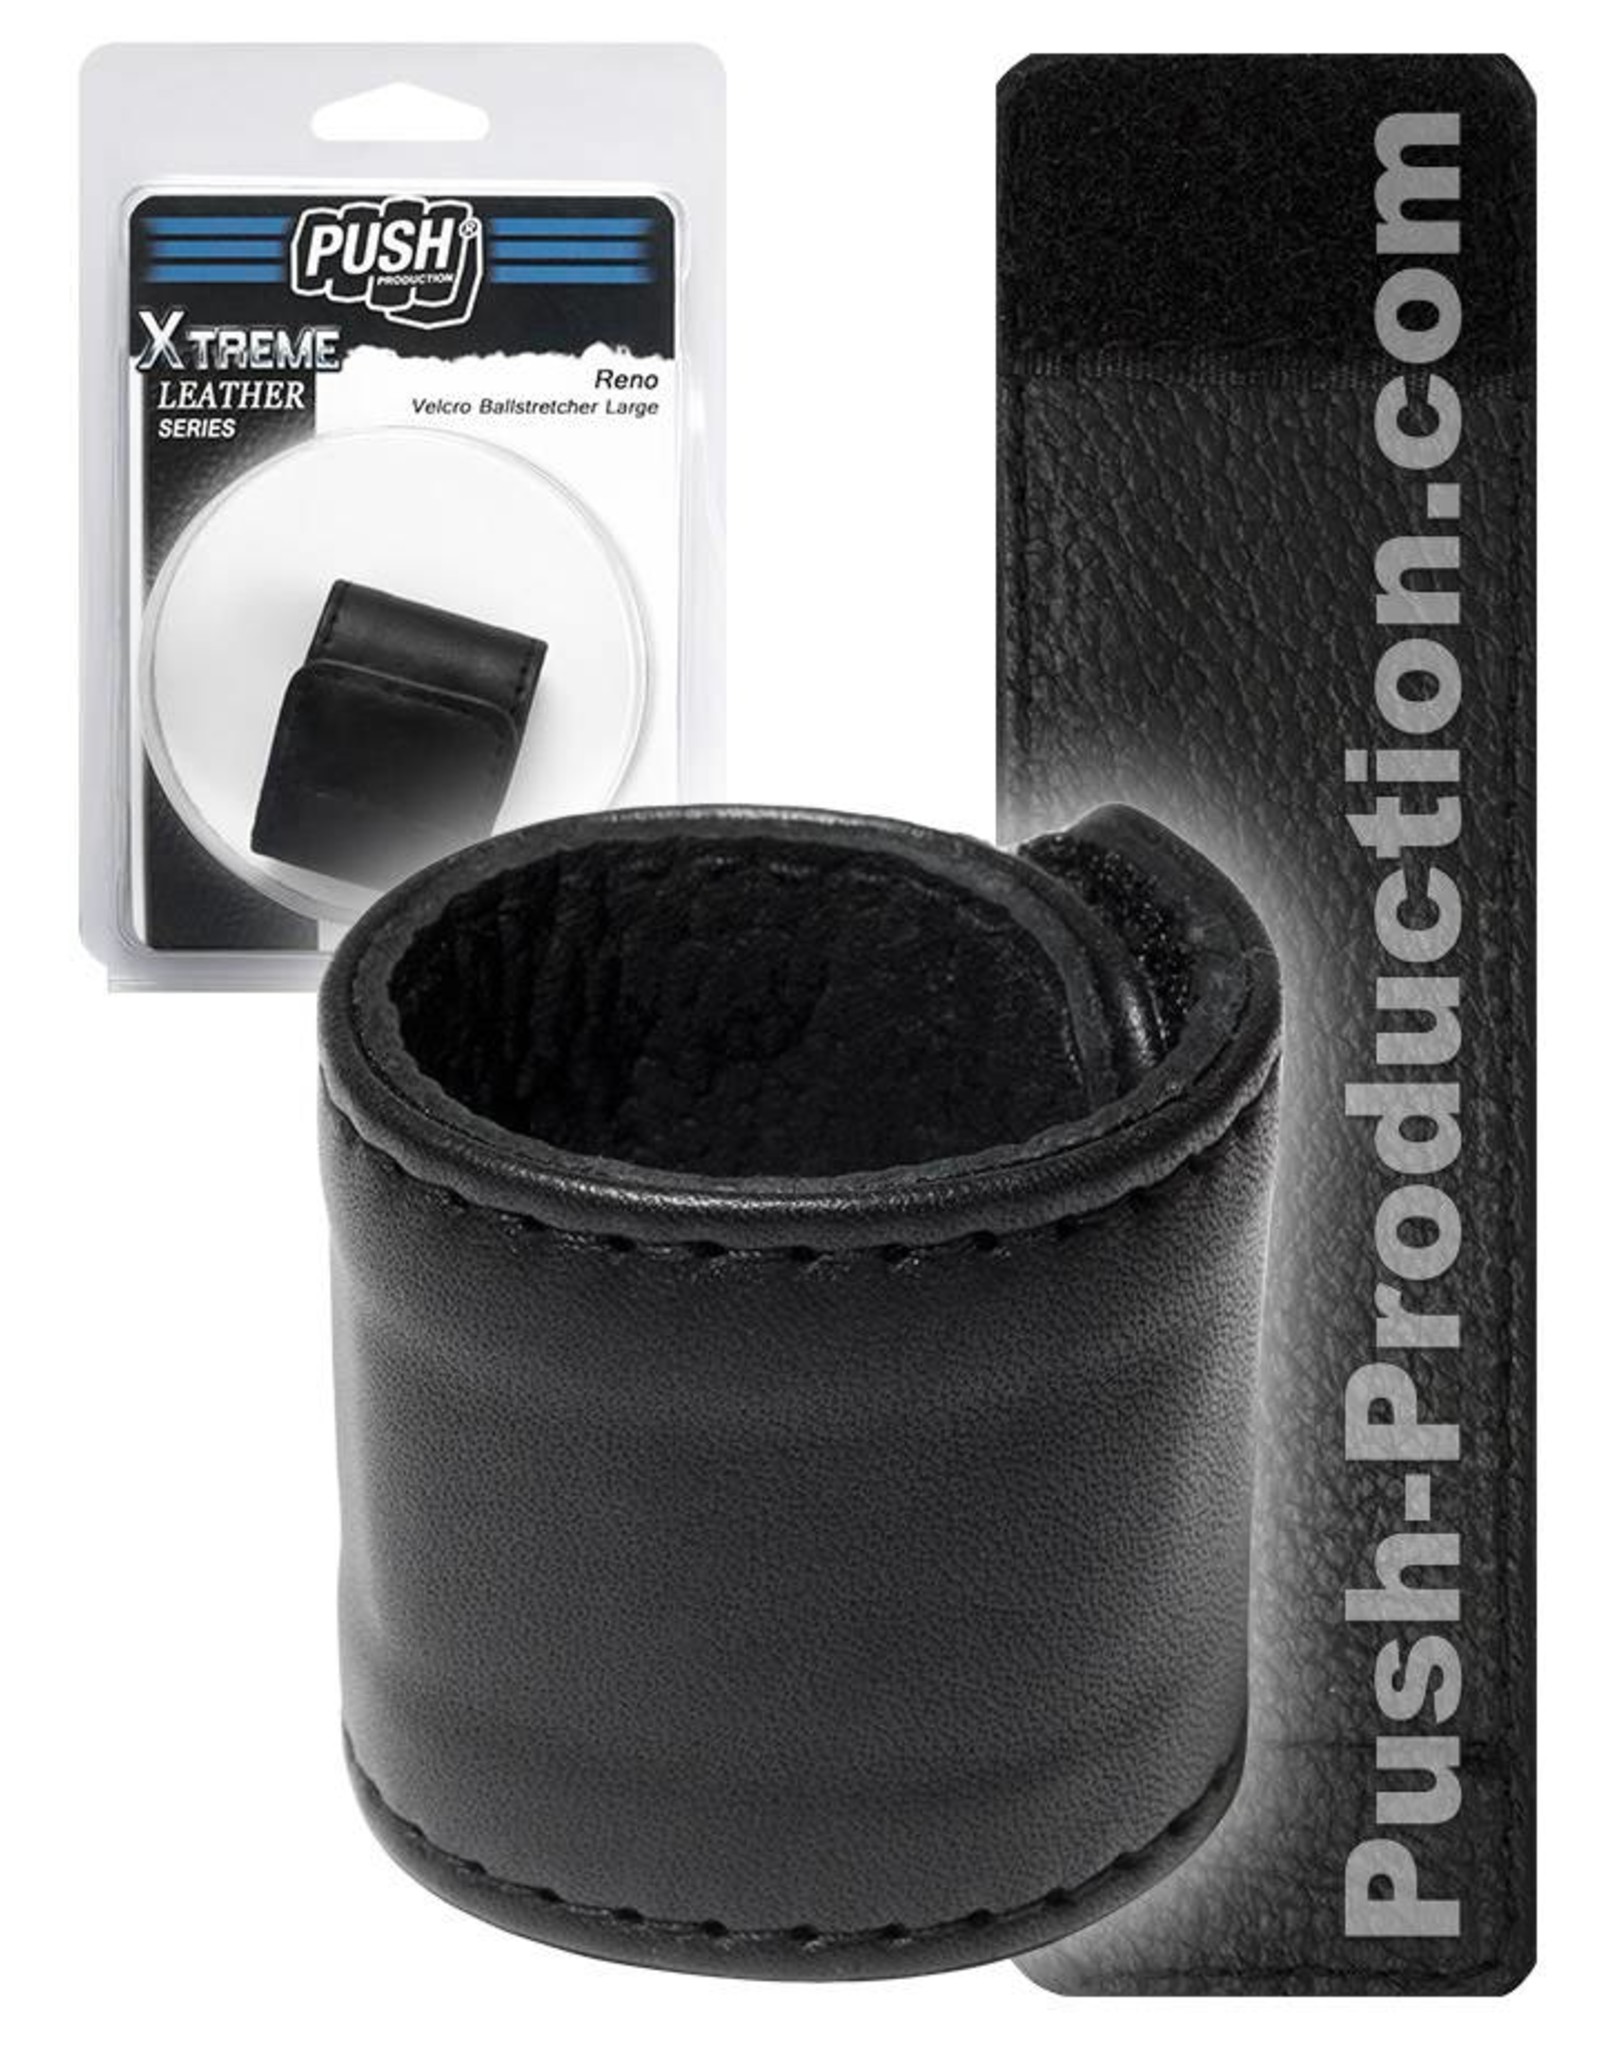 Push Xtreme Leather Reno Velcro Ballstretcher large